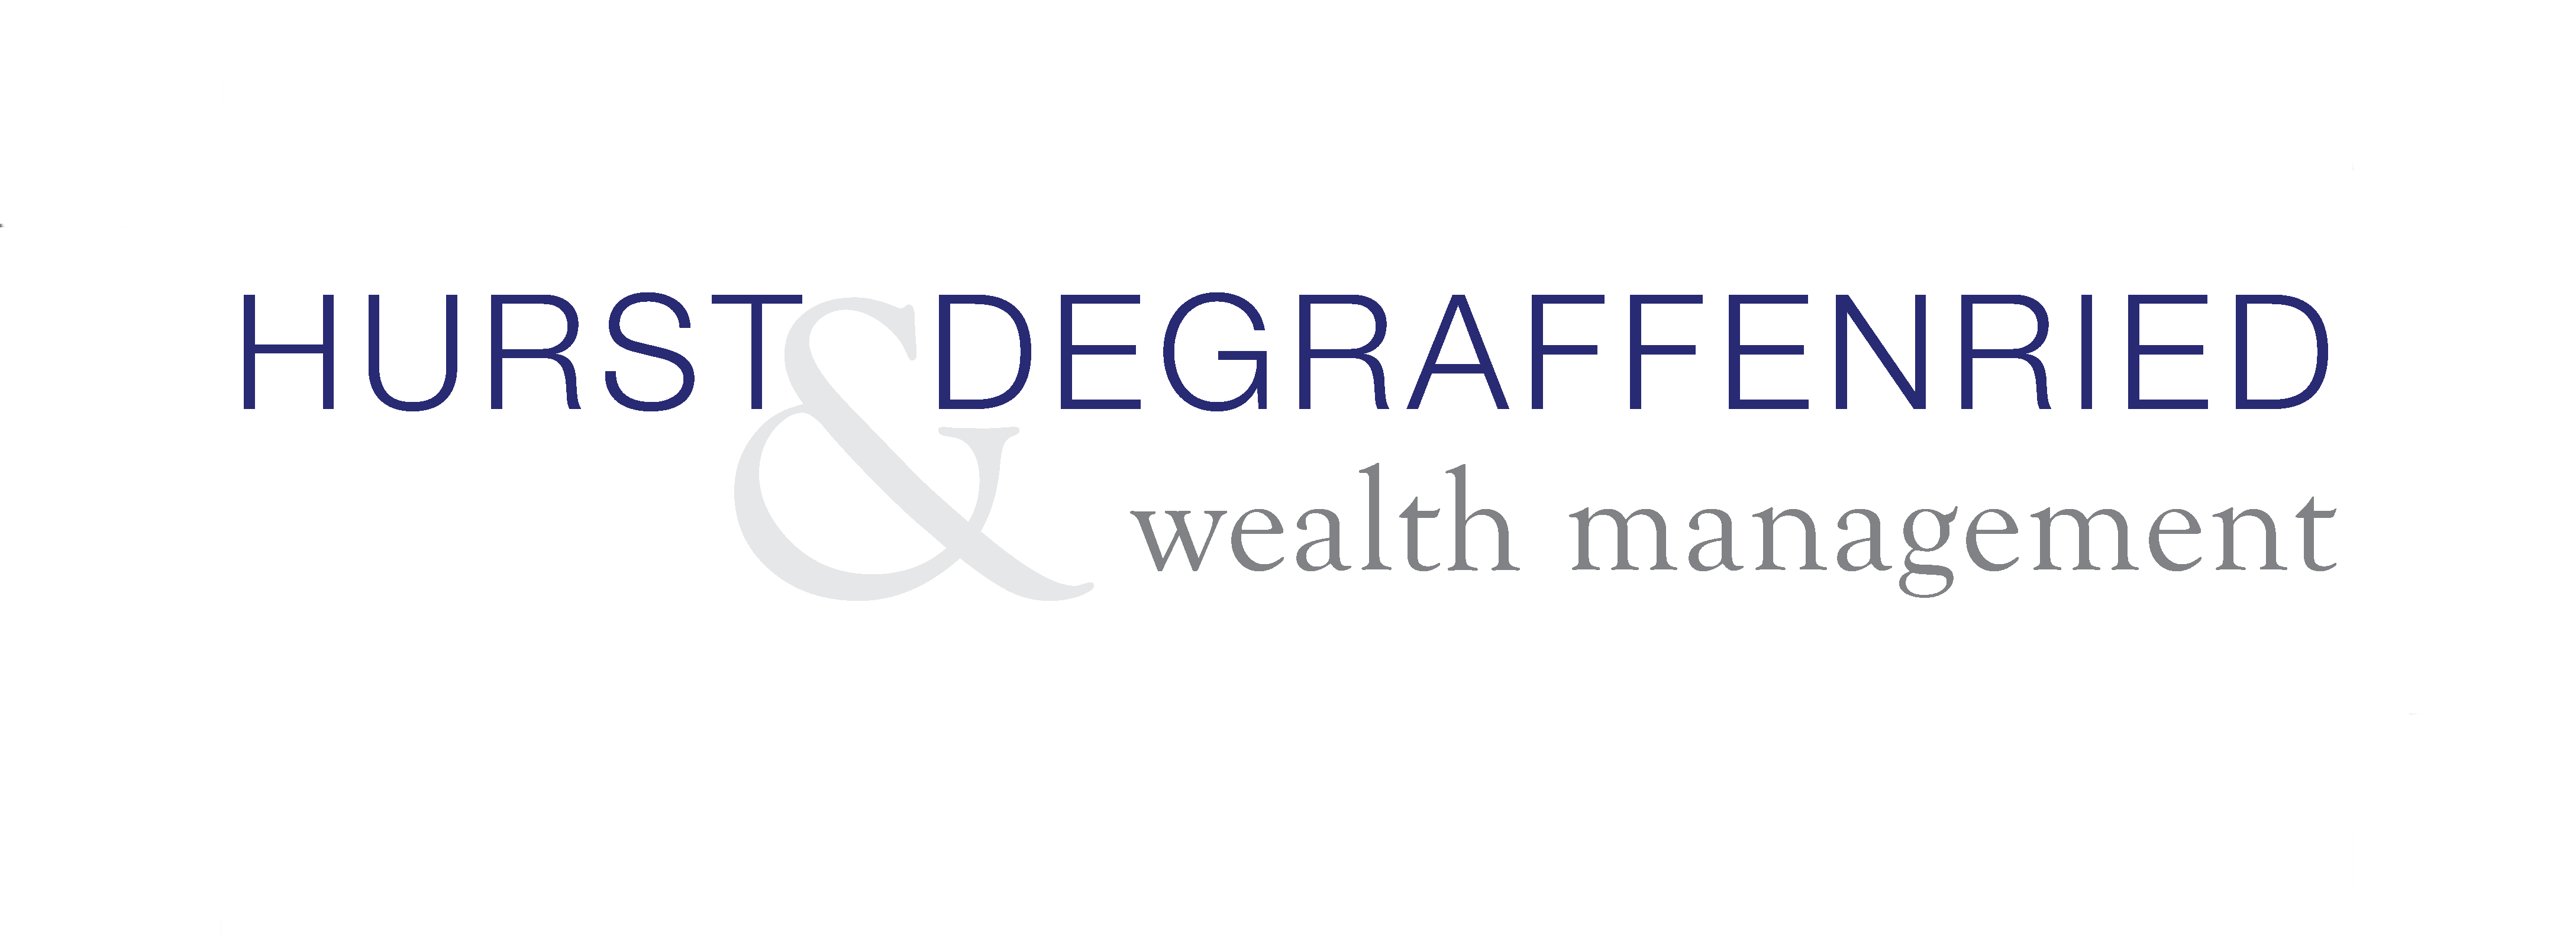 Hurst and DeGraffenried Wealth Management